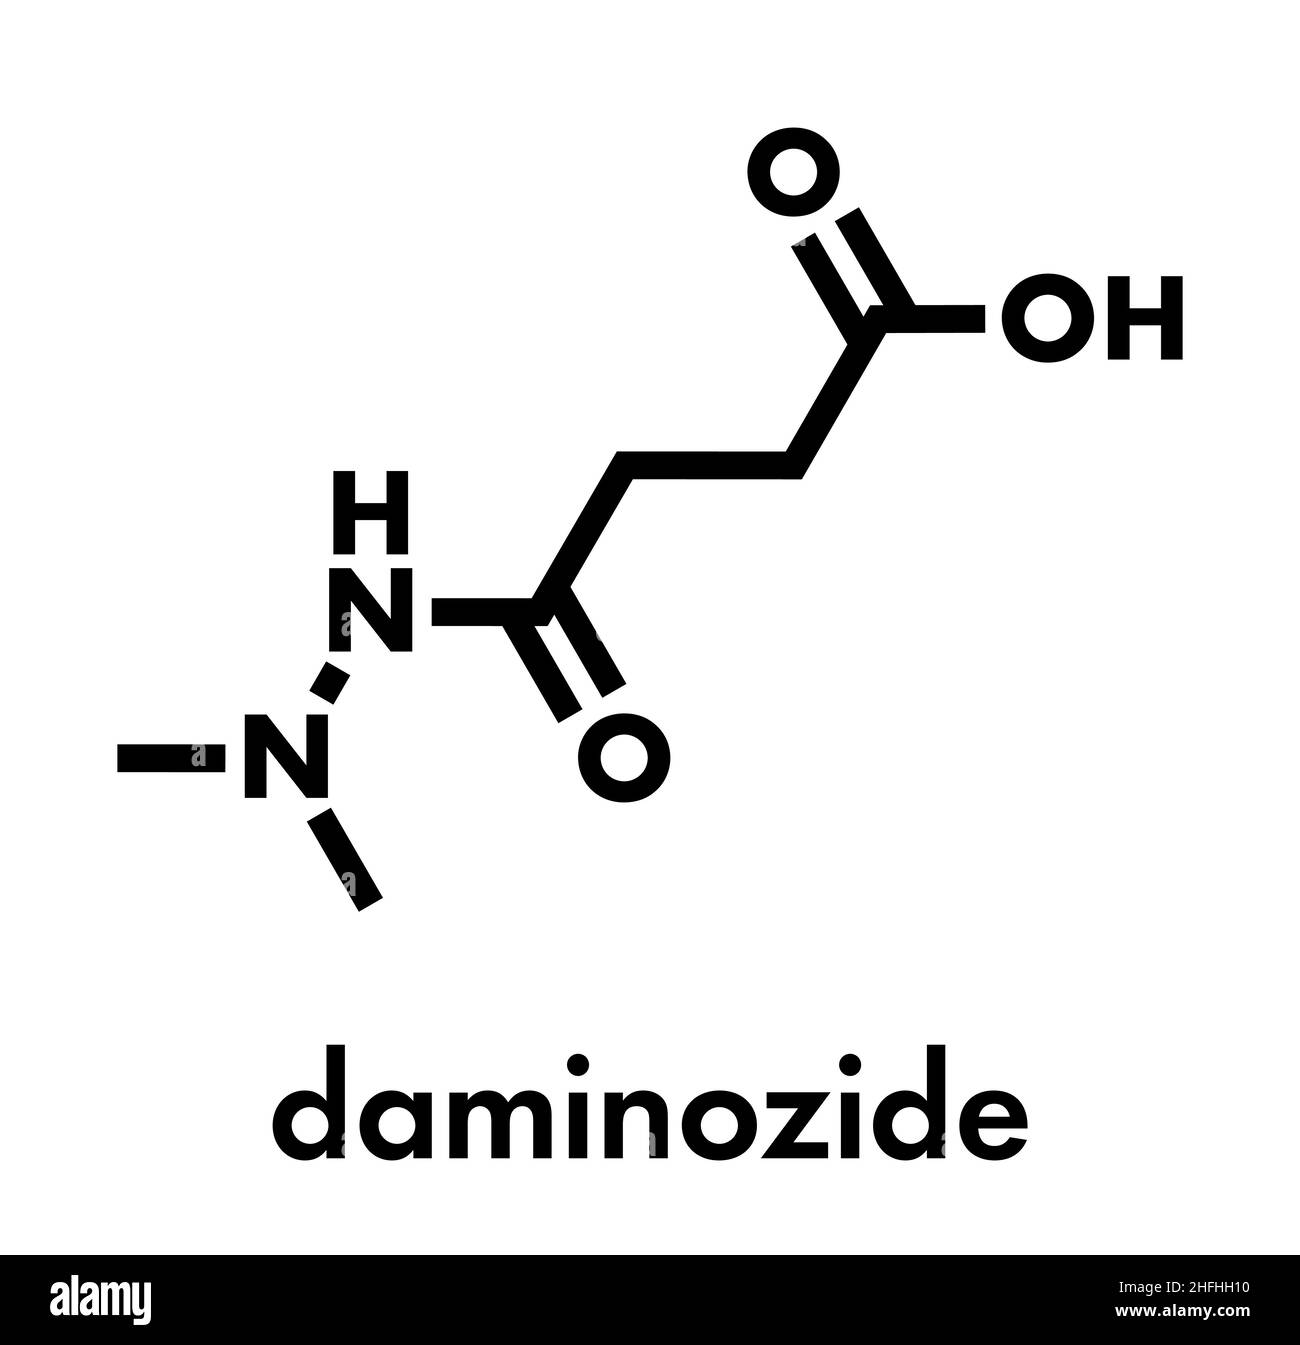 Daminozide (Alar) plant growth regulator molecule. Has been banned because of carcinogenicity concerns. Skeletal formula. Stock Vector